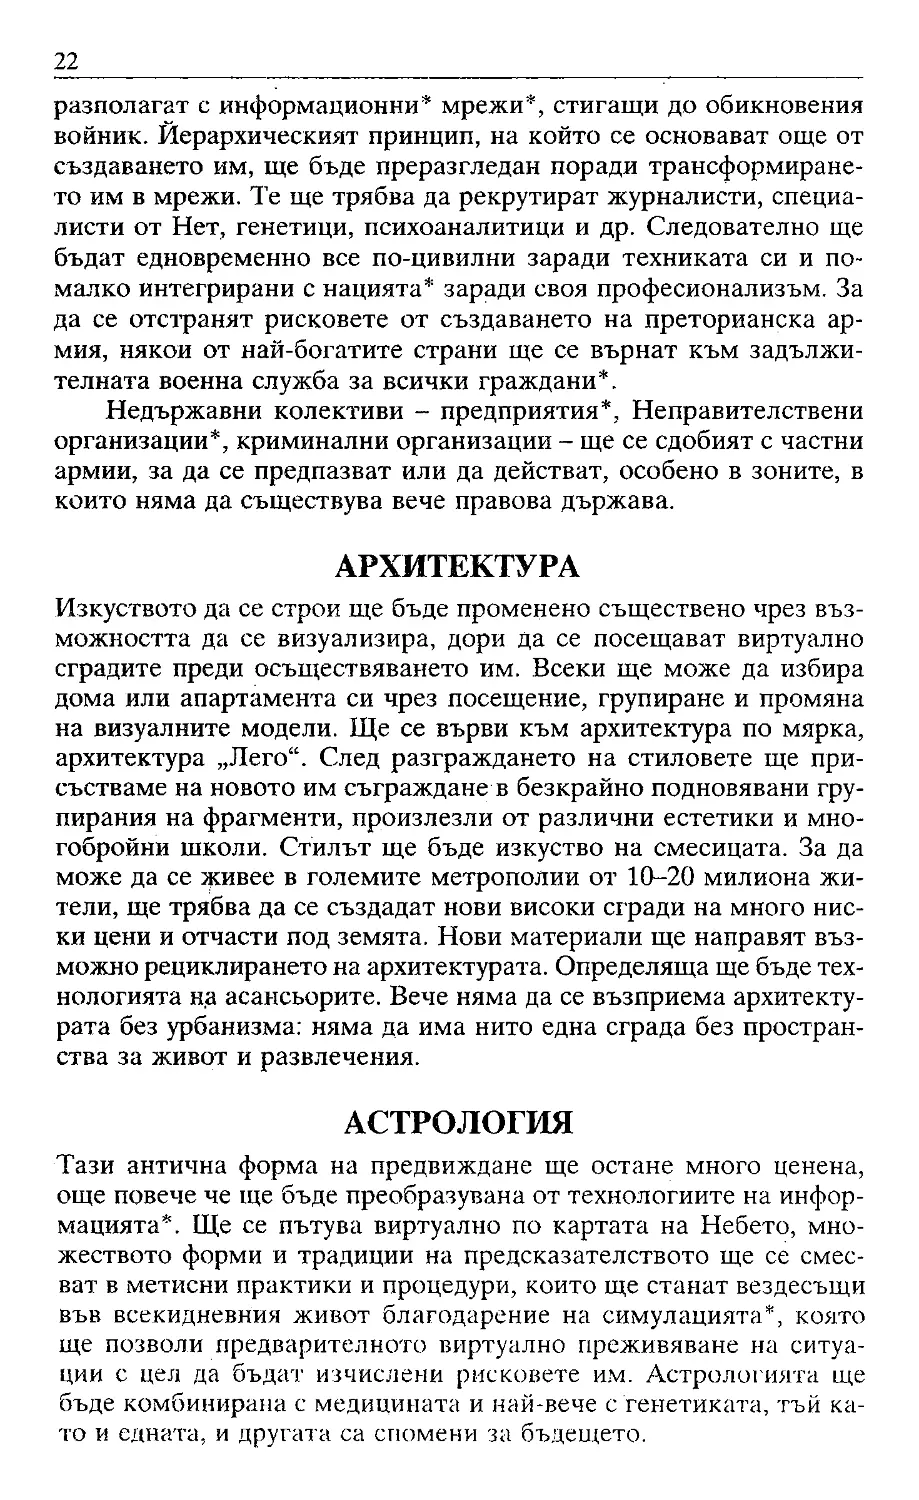 ﻿Жак Атали. Речник на 21 век_Page_010_Image_0001_1